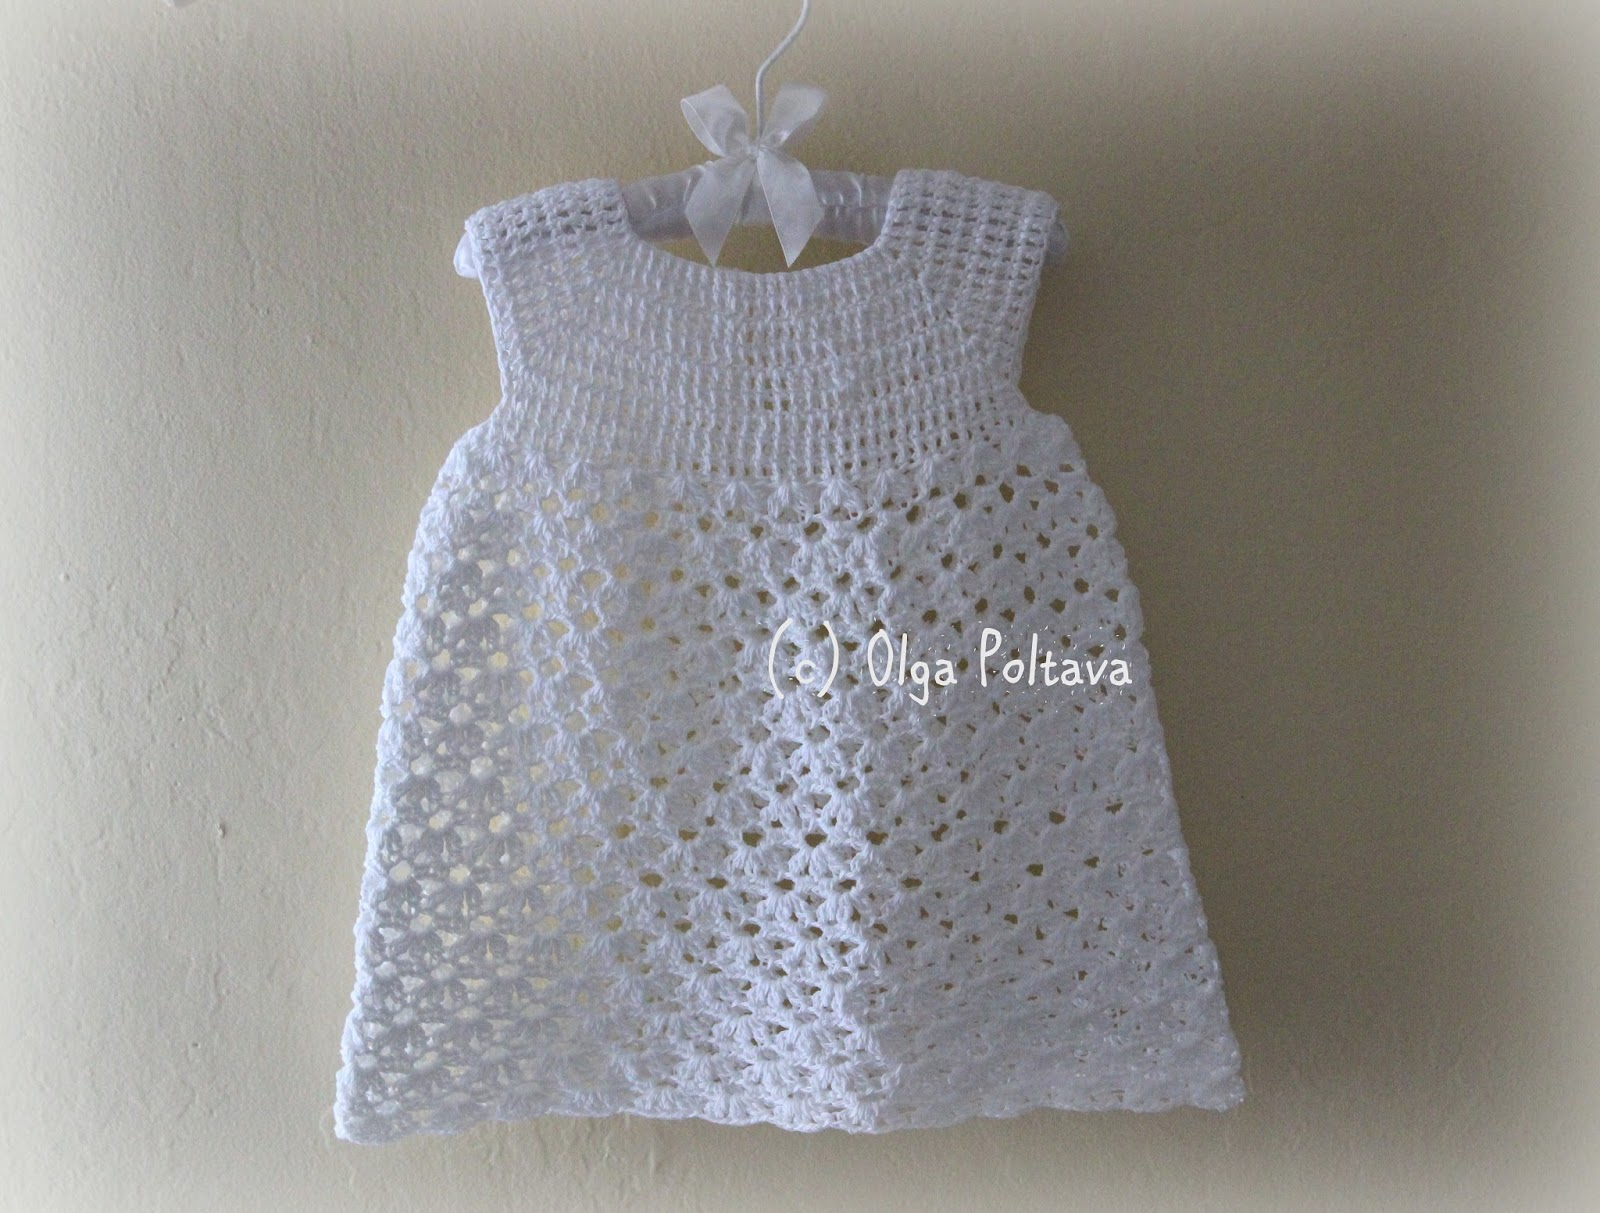 Crochet Baby Dress Free Pattern Lacy Crochet Two New Patterns Ba Dress And Girls Hat